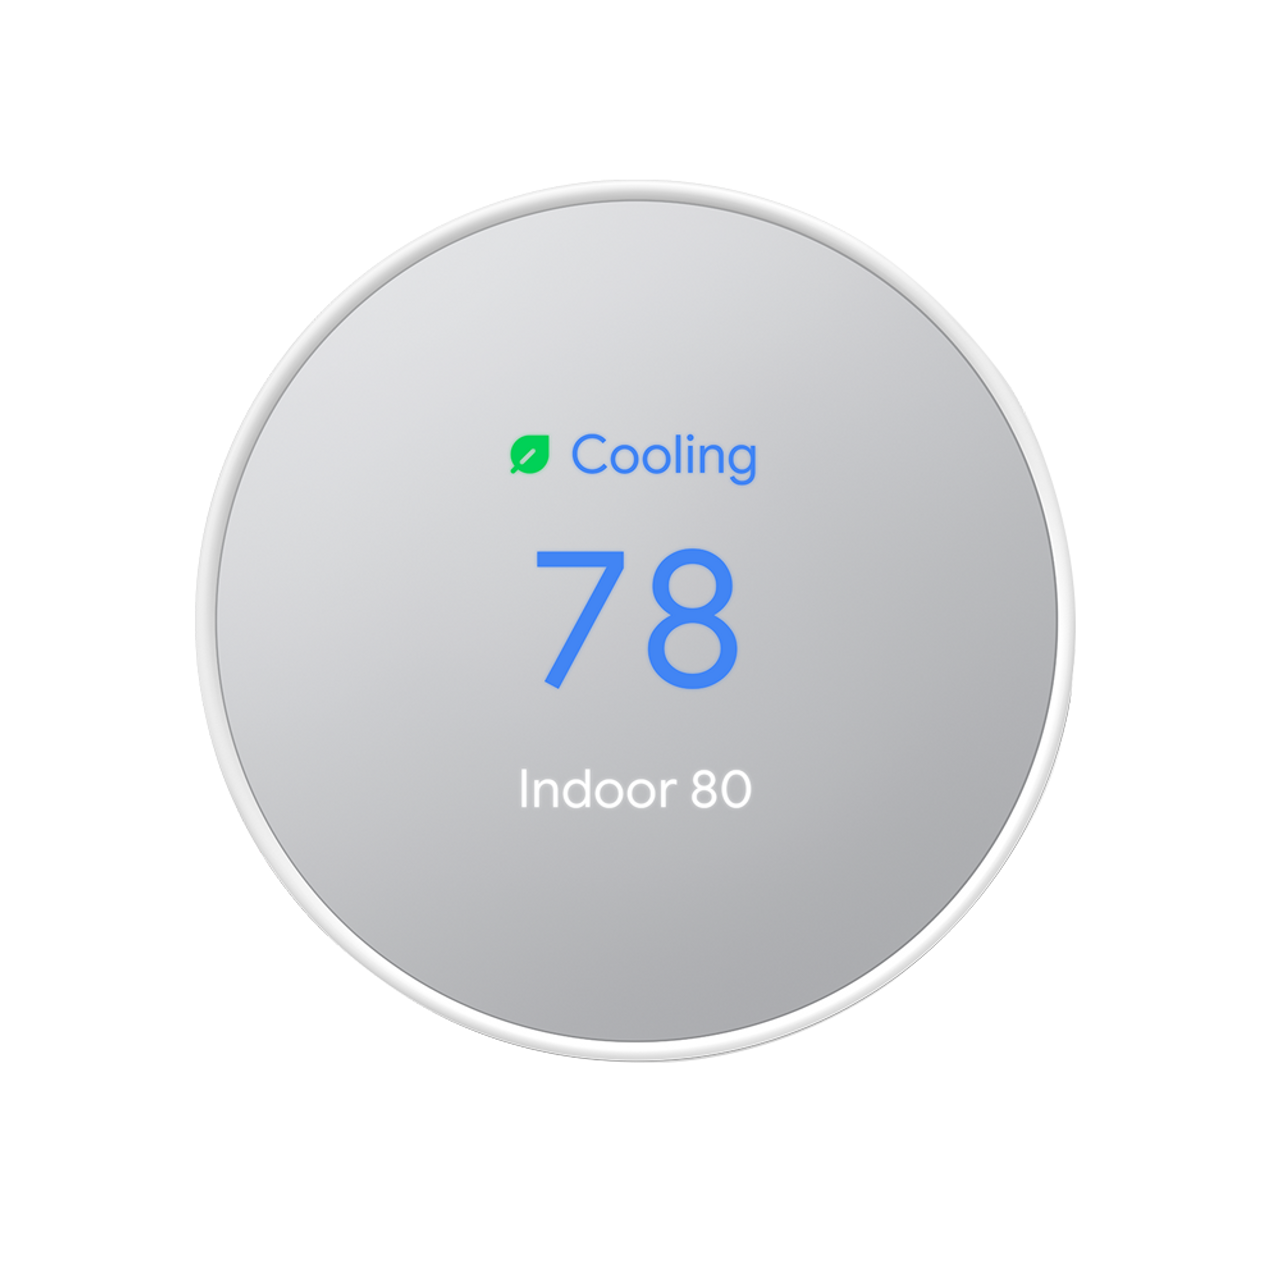 Nest snow white thermostat set to cool 78 degrees